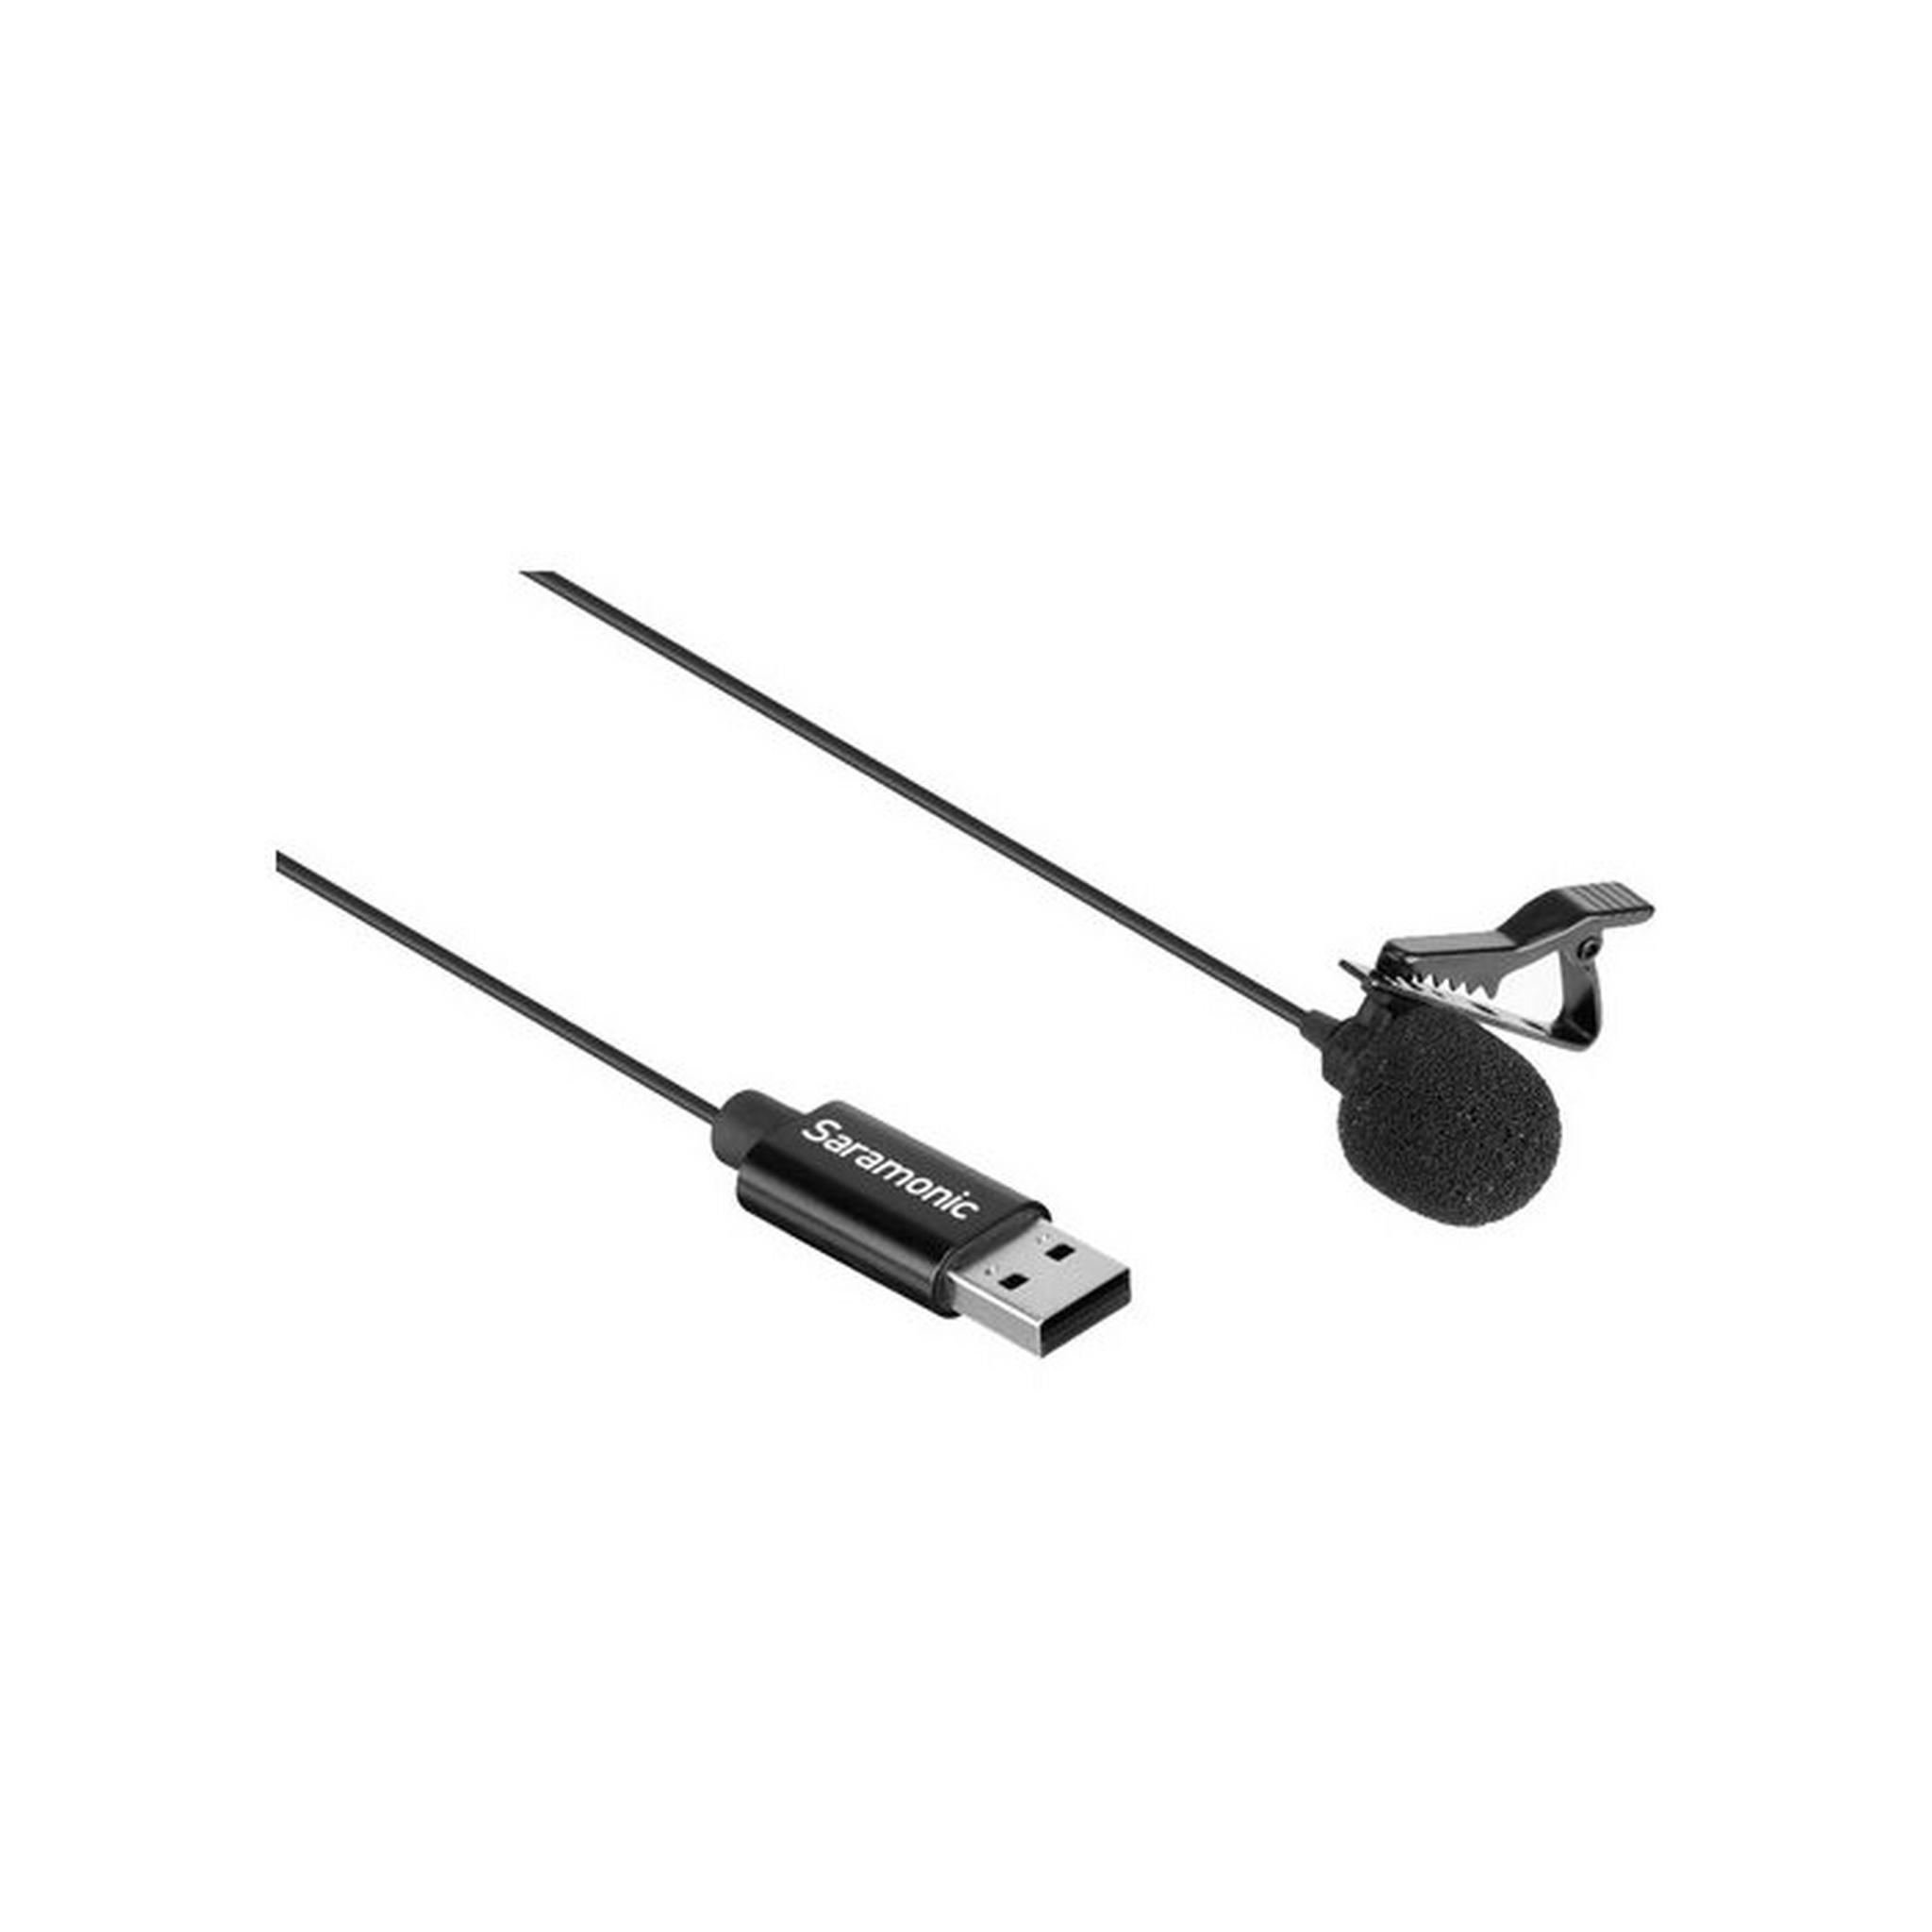 SARAMONIC Clip-on USB Lavalier Microphone, 2m Cable, SR-ULM10 - Black